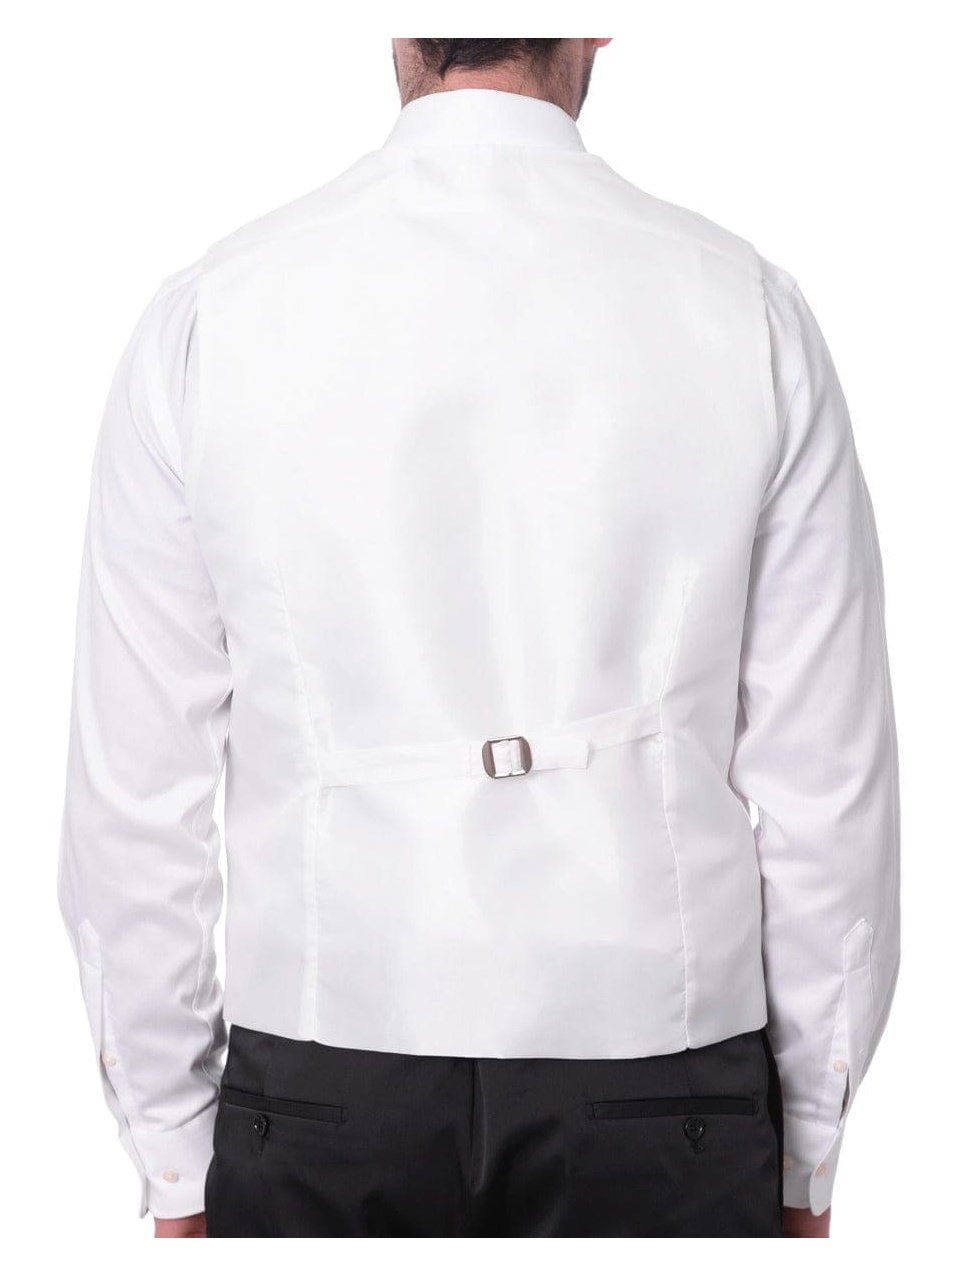 Cemden TWO PIECE SUITS Cemden Mens Slim Fit Solid White 1-button 3 Piece Tuxedo Suit With Shawl Lapels